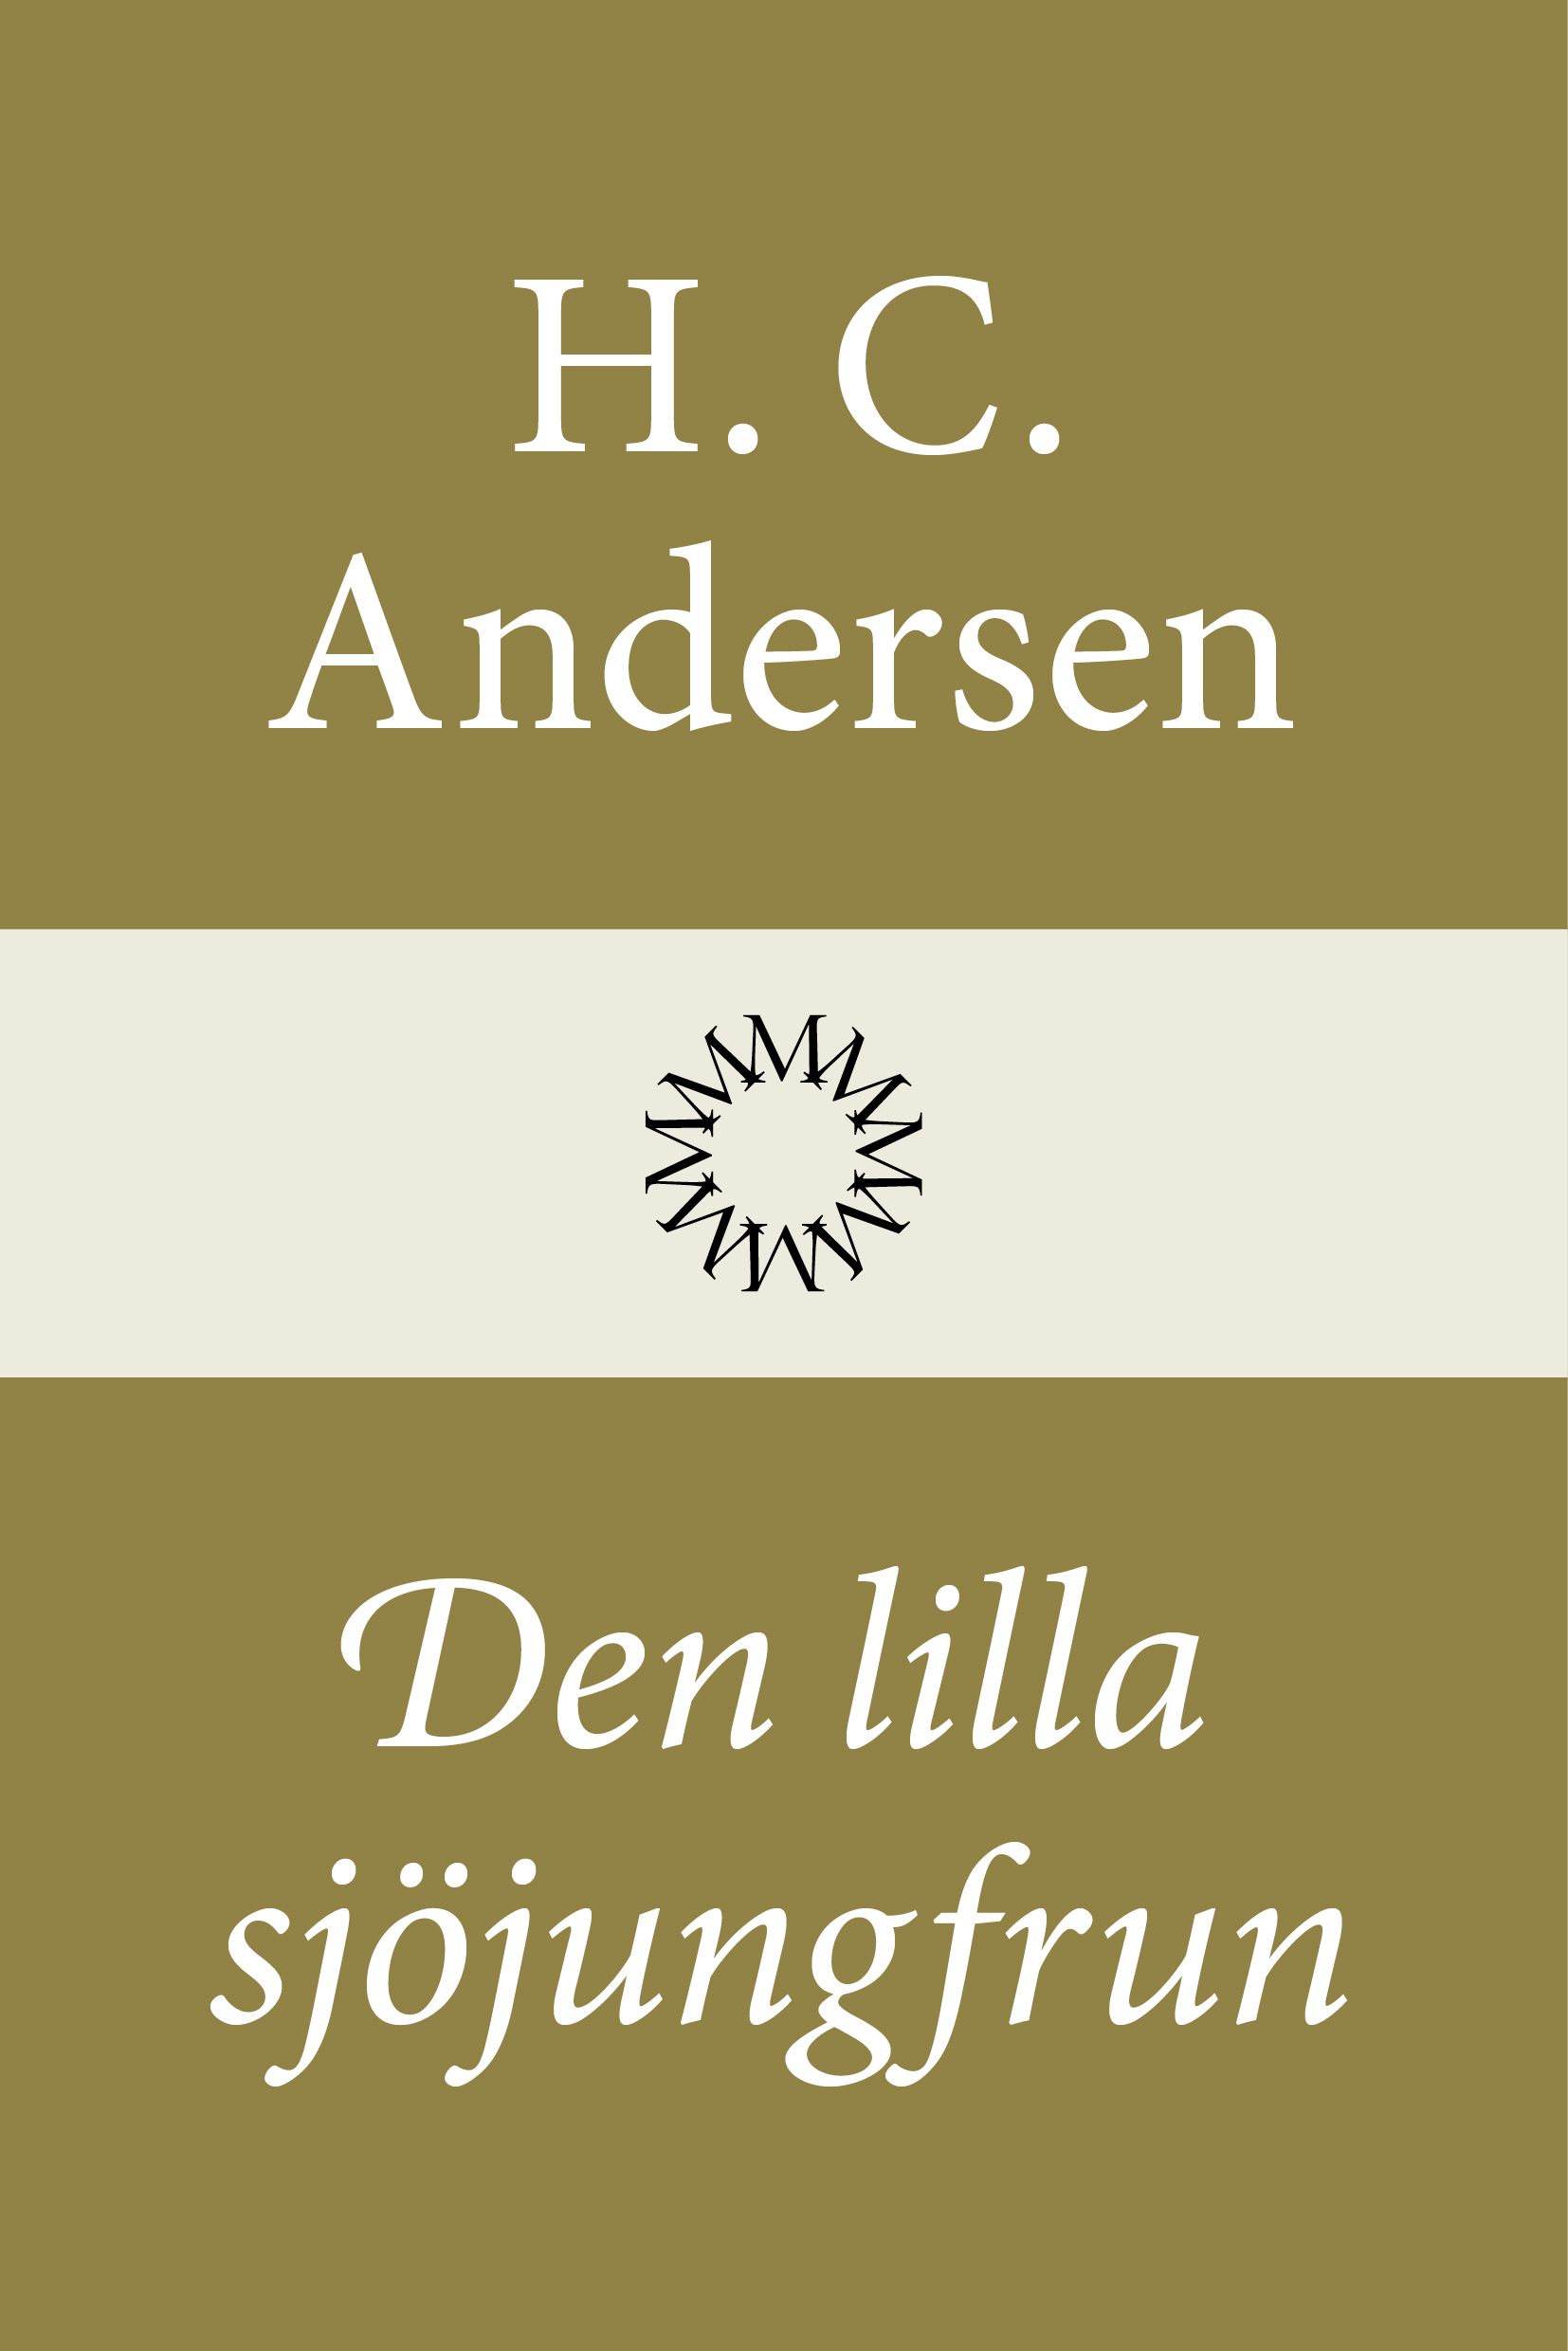 Den lilla sjöjungfrun, eBook by H. C. Andersen